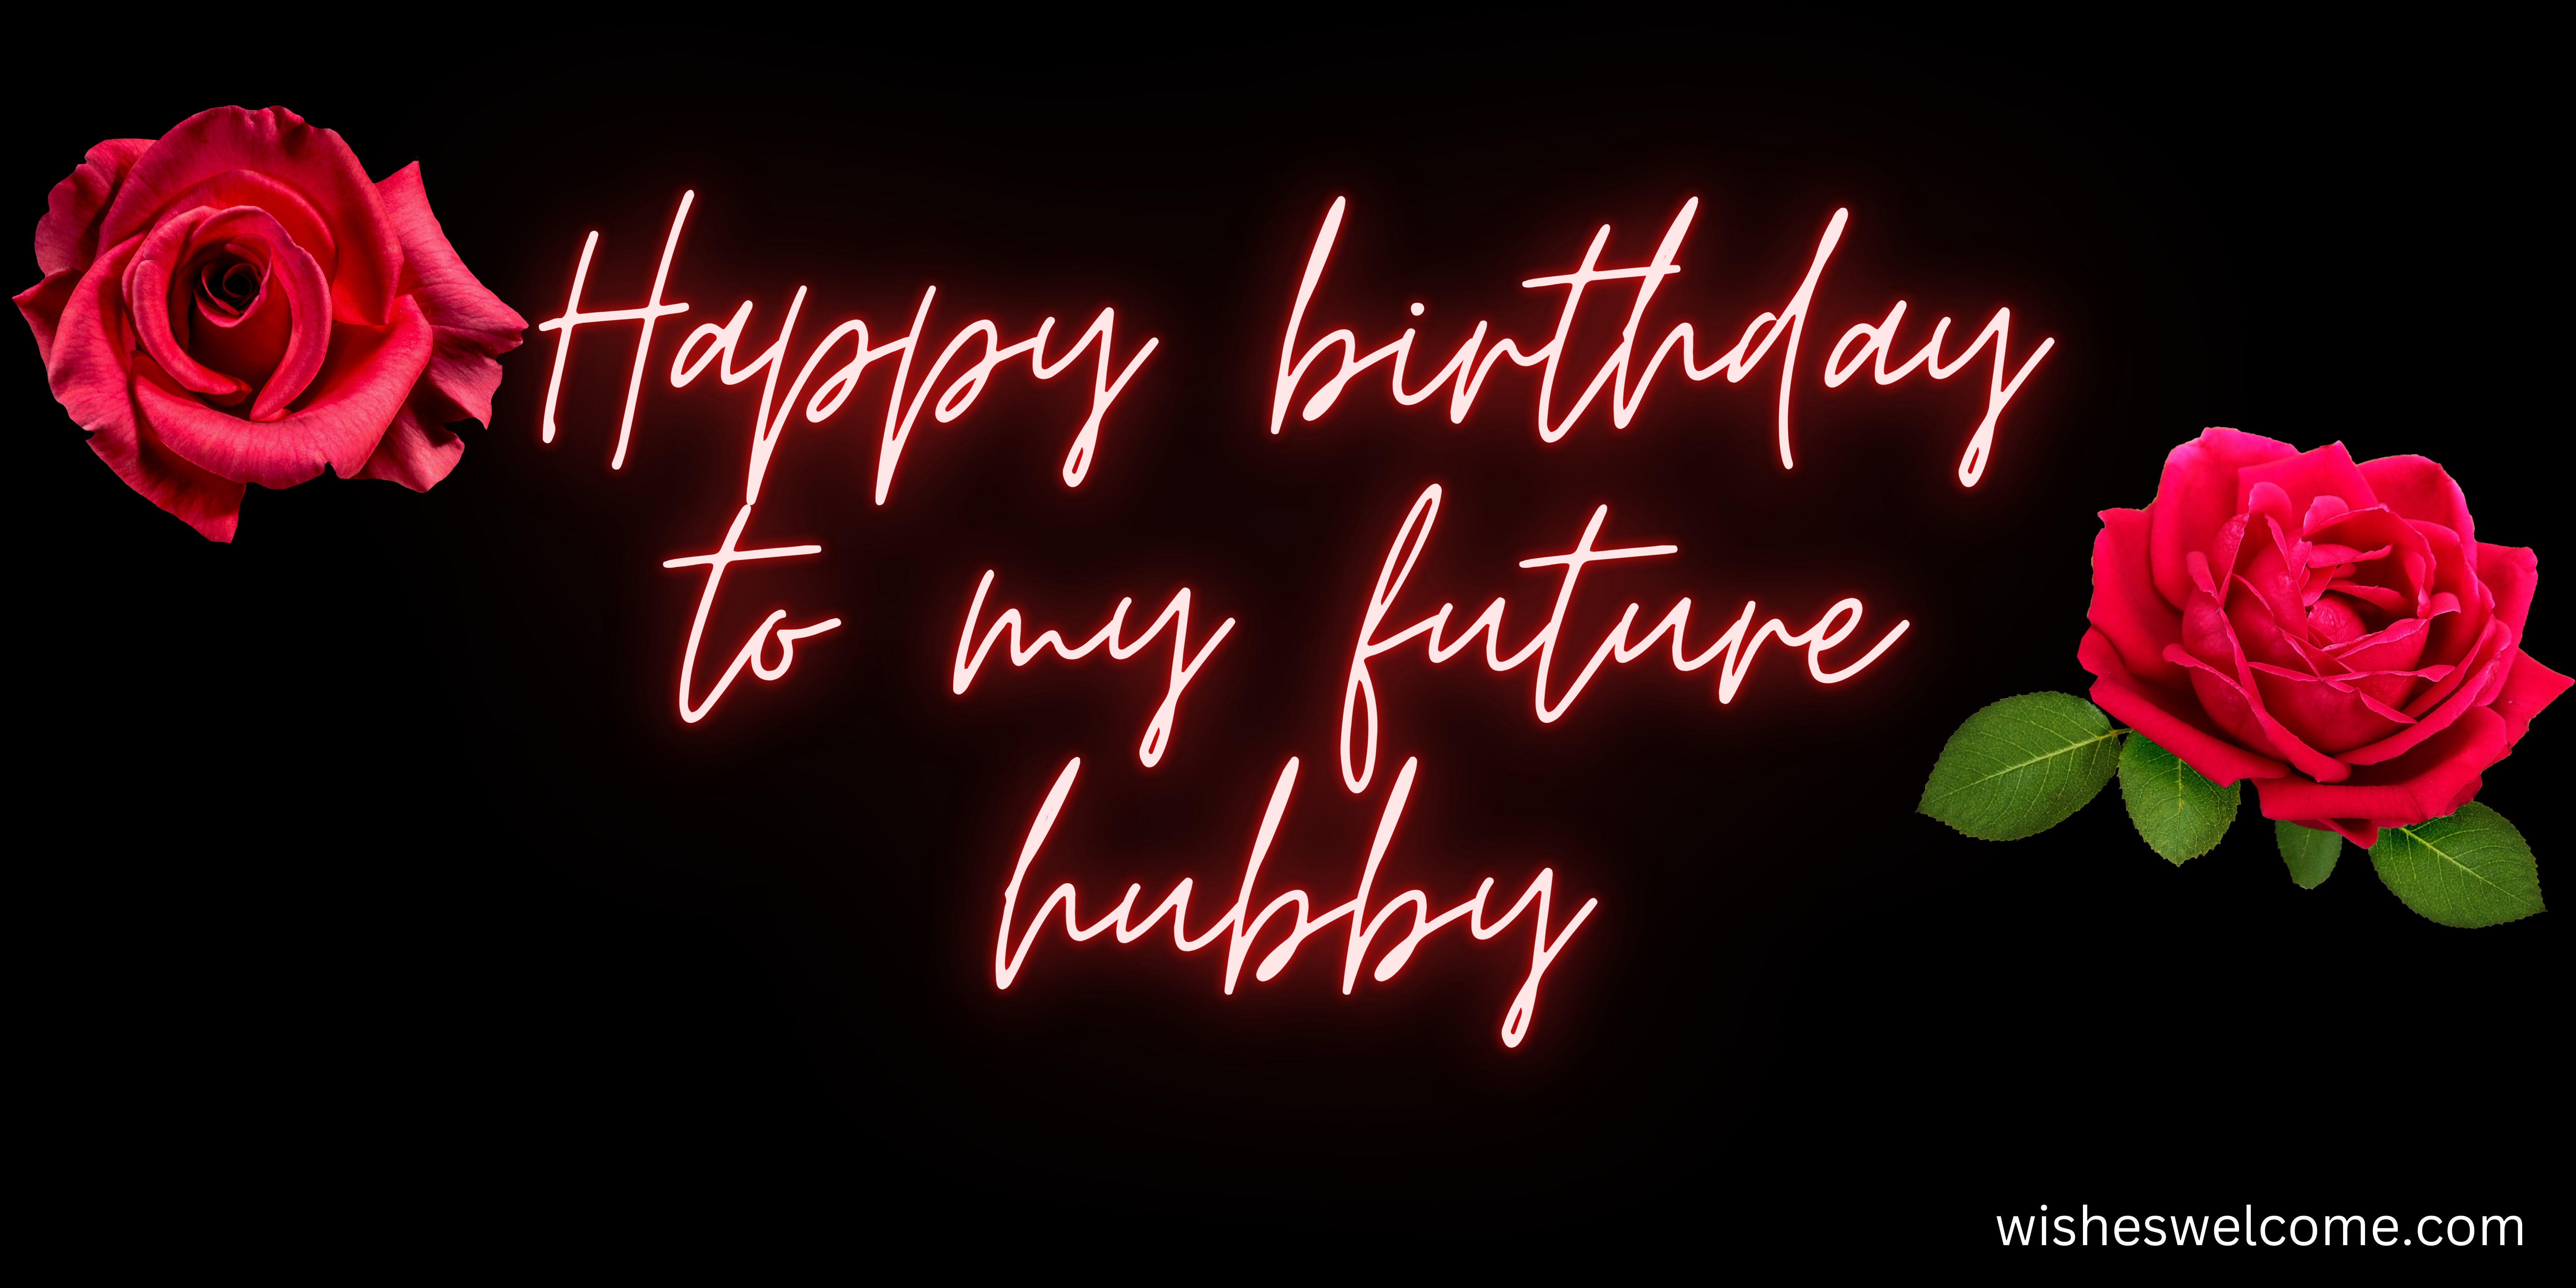 30th birthday wishes